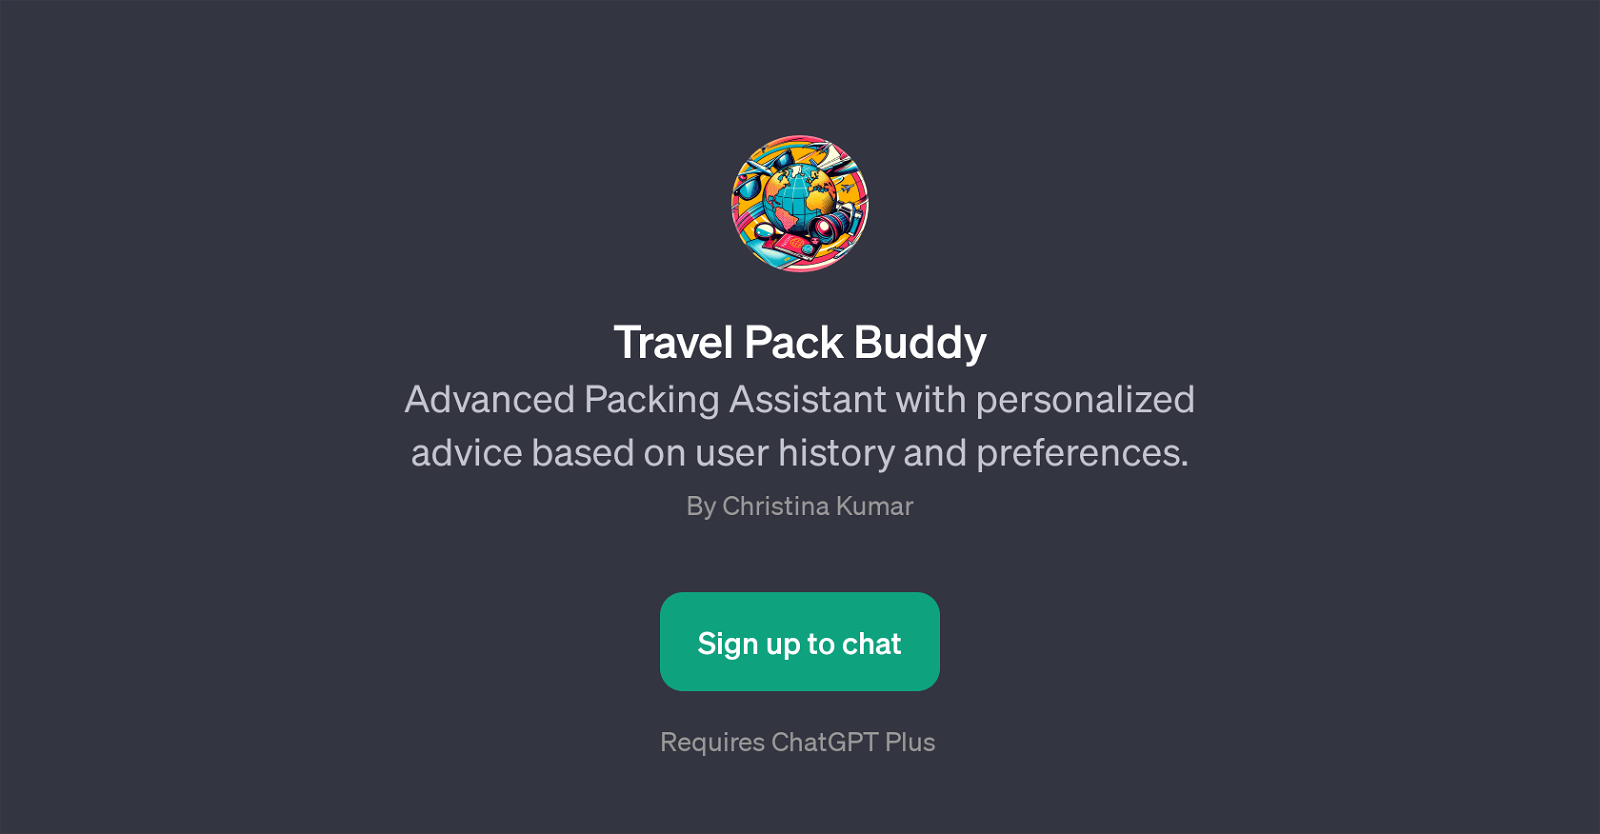 Travel Pack Buddy website